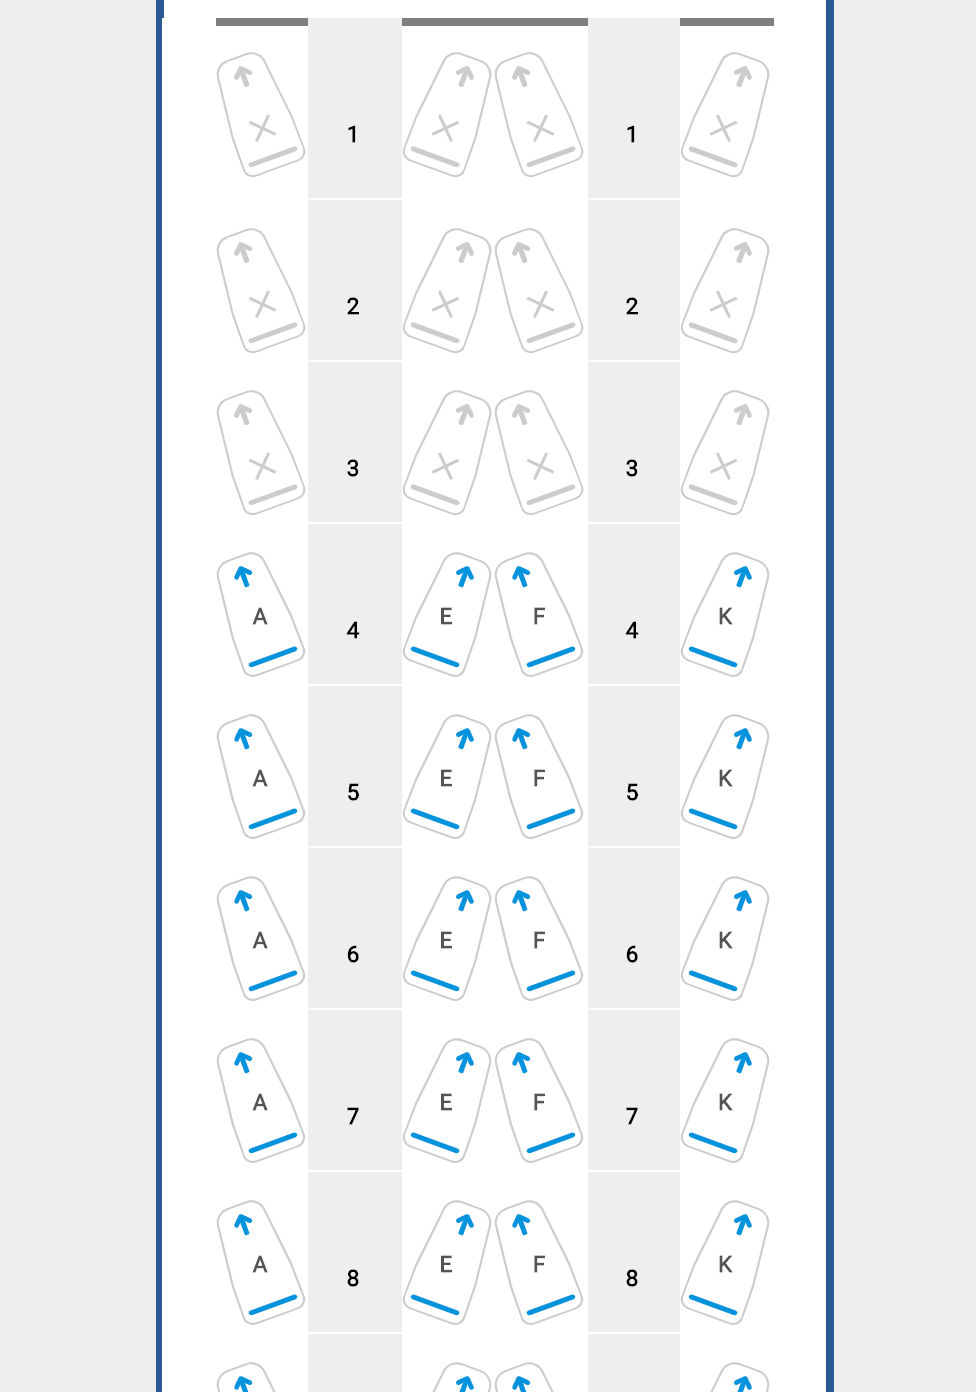 British Airways A350 Club Suite seat map